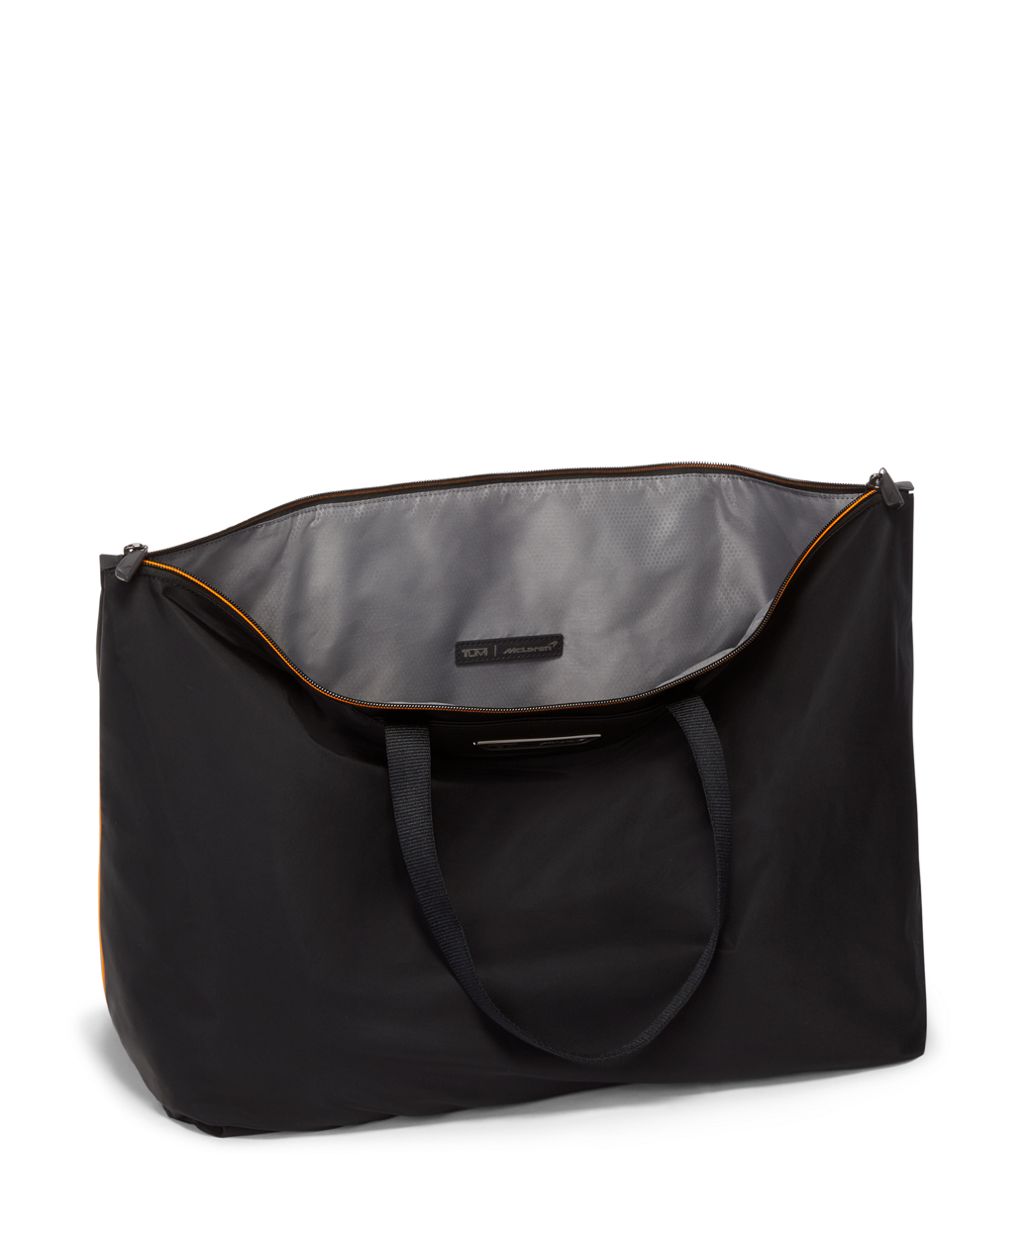 New Arrivals Trendy Cool & Versatile Nylon Cloth Bag, Personality